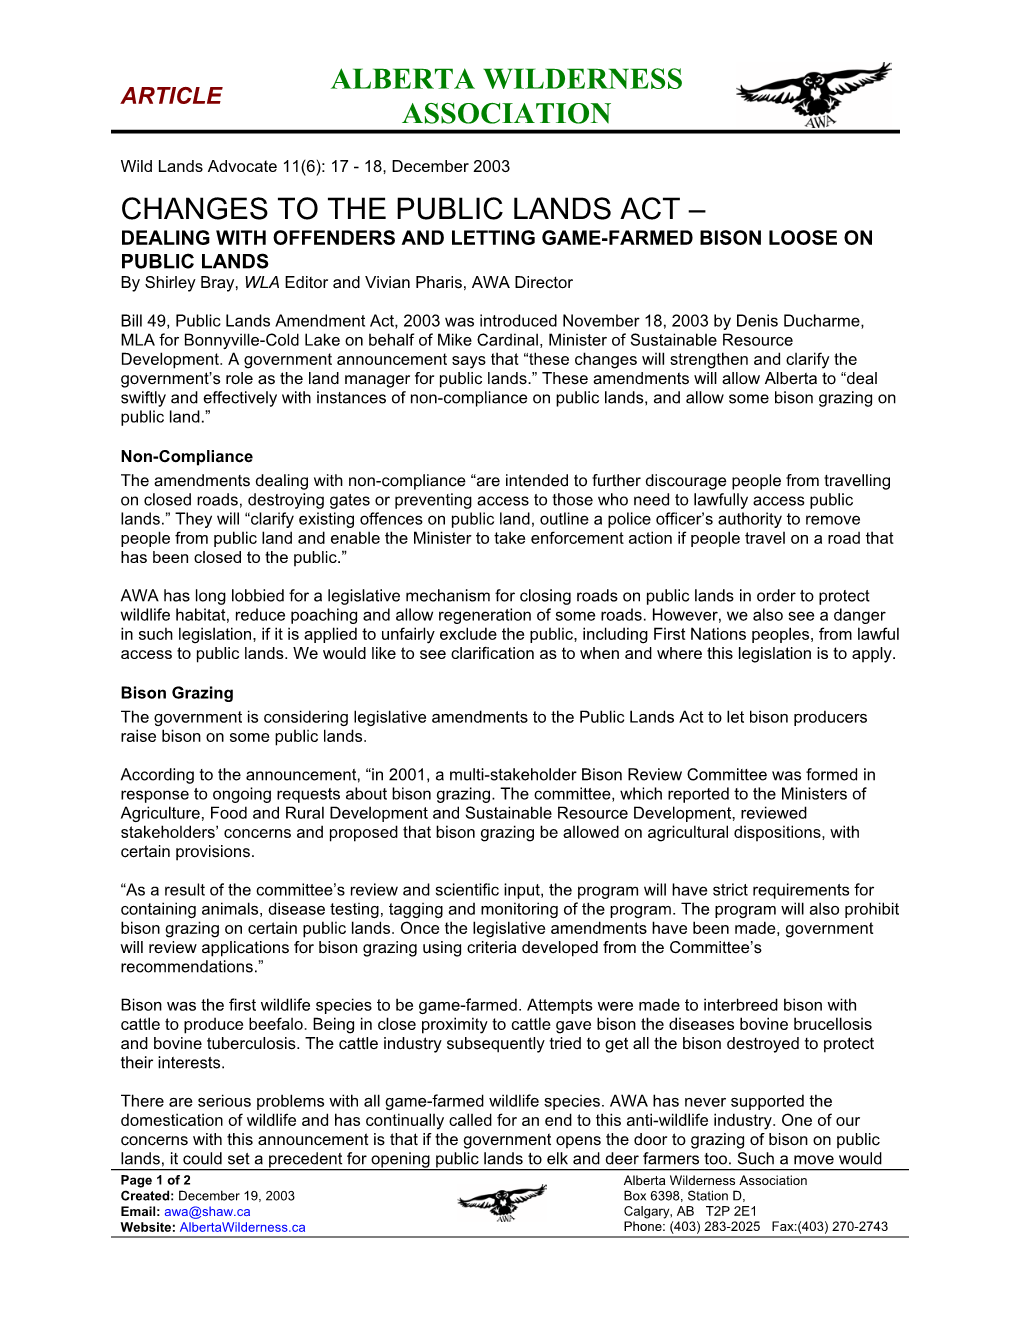 Changes to the Public Lands